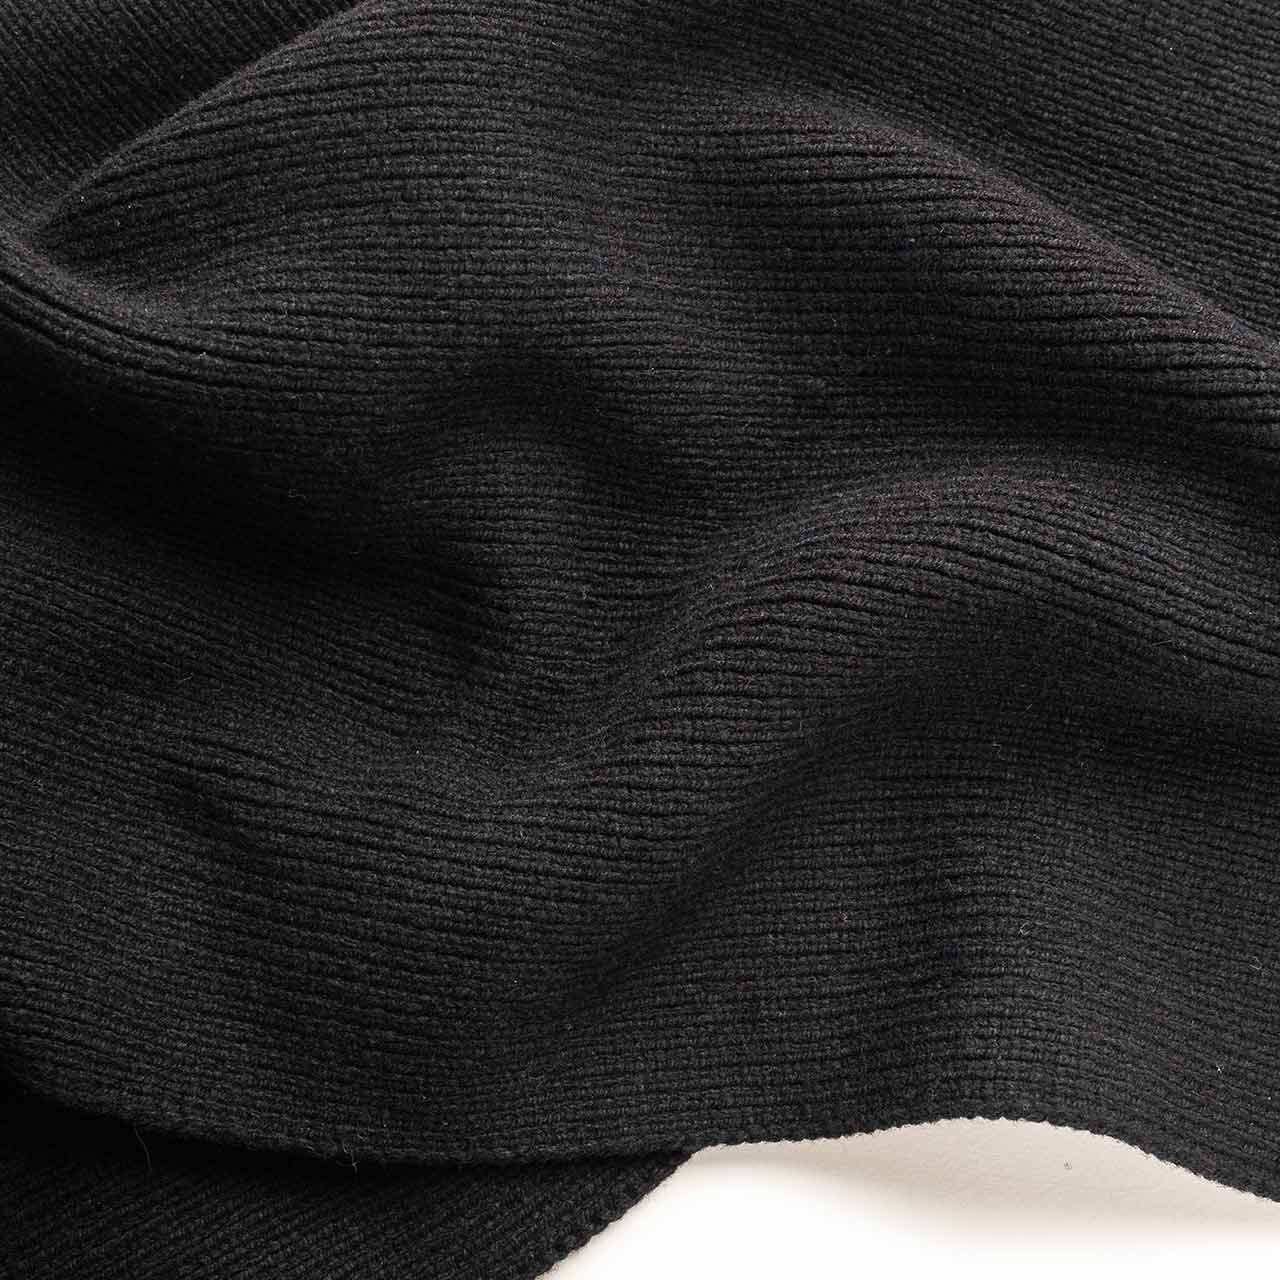 aries rubber patch scarf (black) - frar90001-blk - a.plus - Image - 3